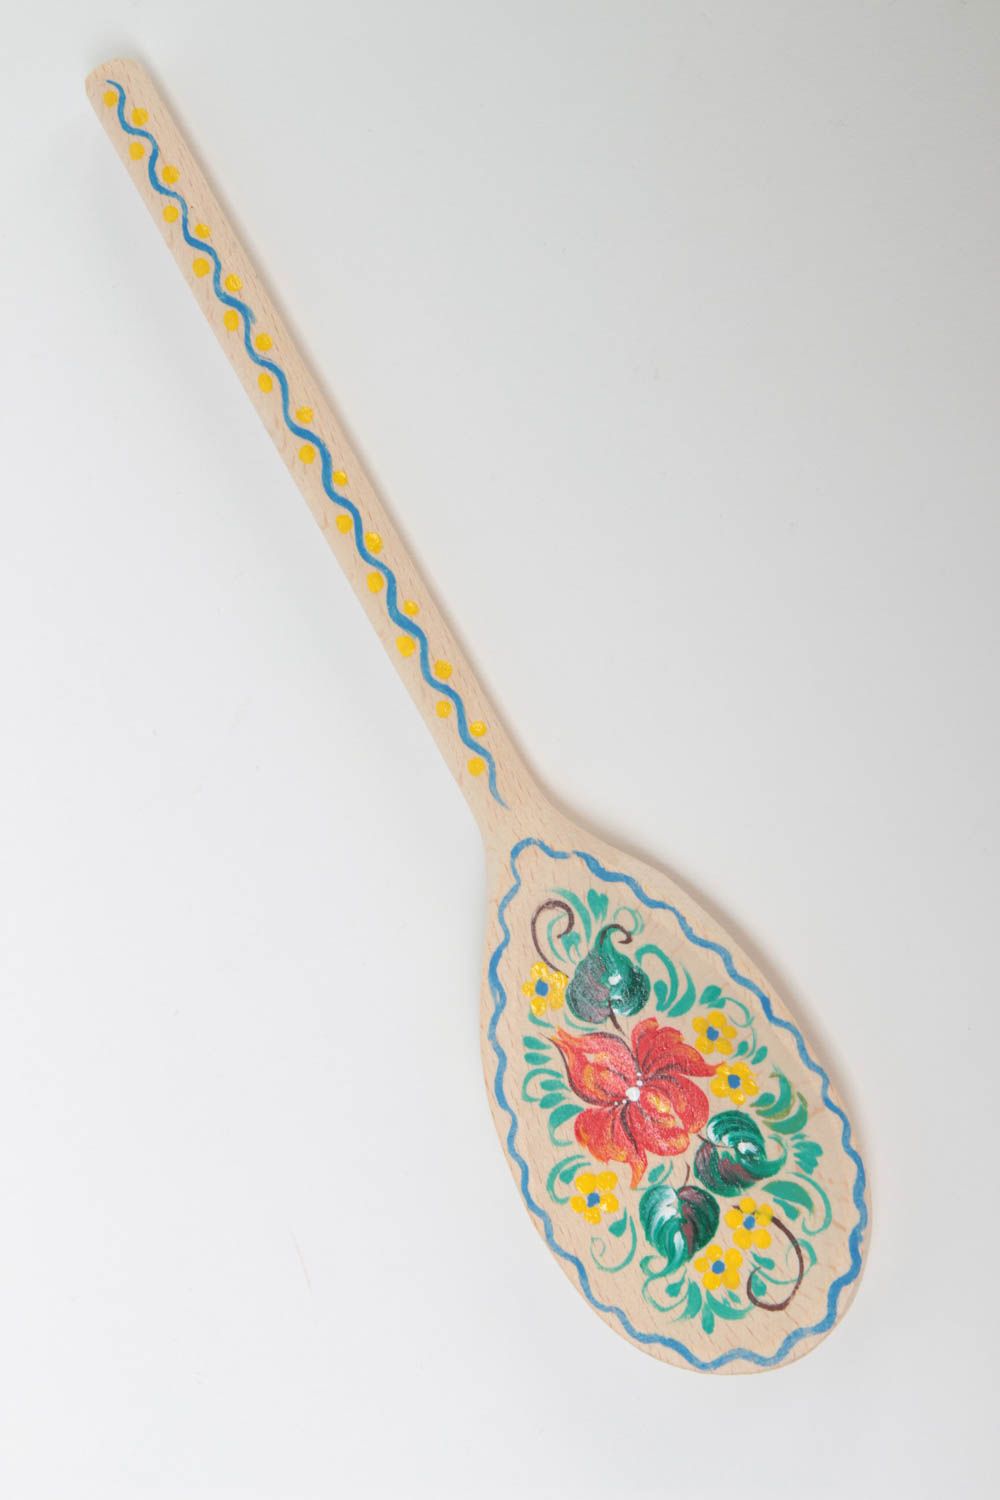 Ethnic spoon decoration ideas wooden cutlery unusual gift kitchen accessories photo 2